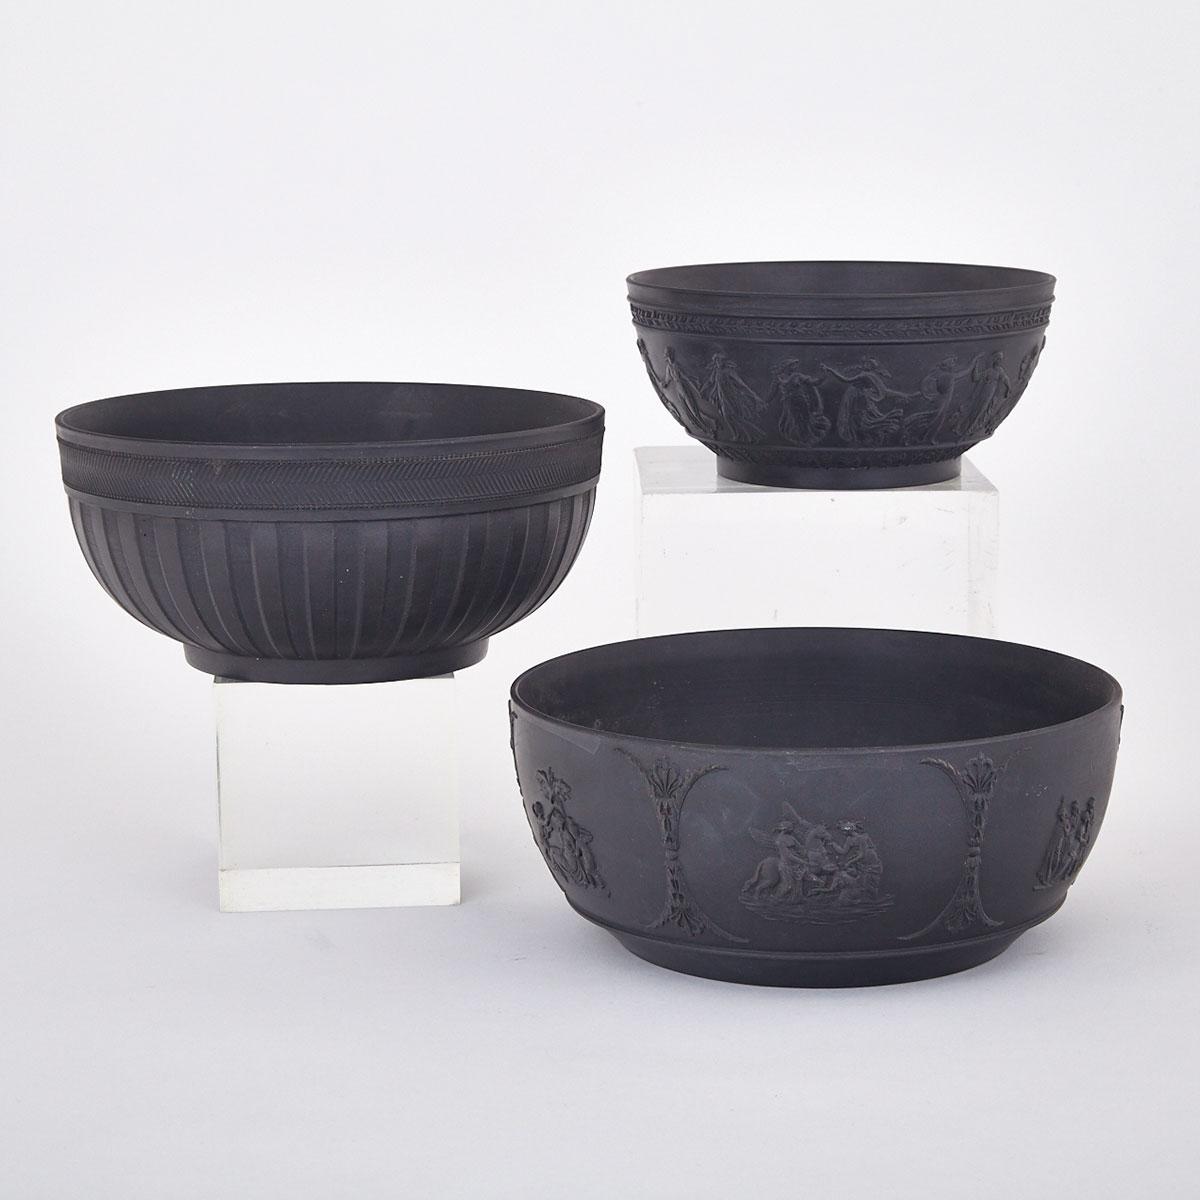 Three Wedgwood Black Basalt Bowls, 19th/20th century